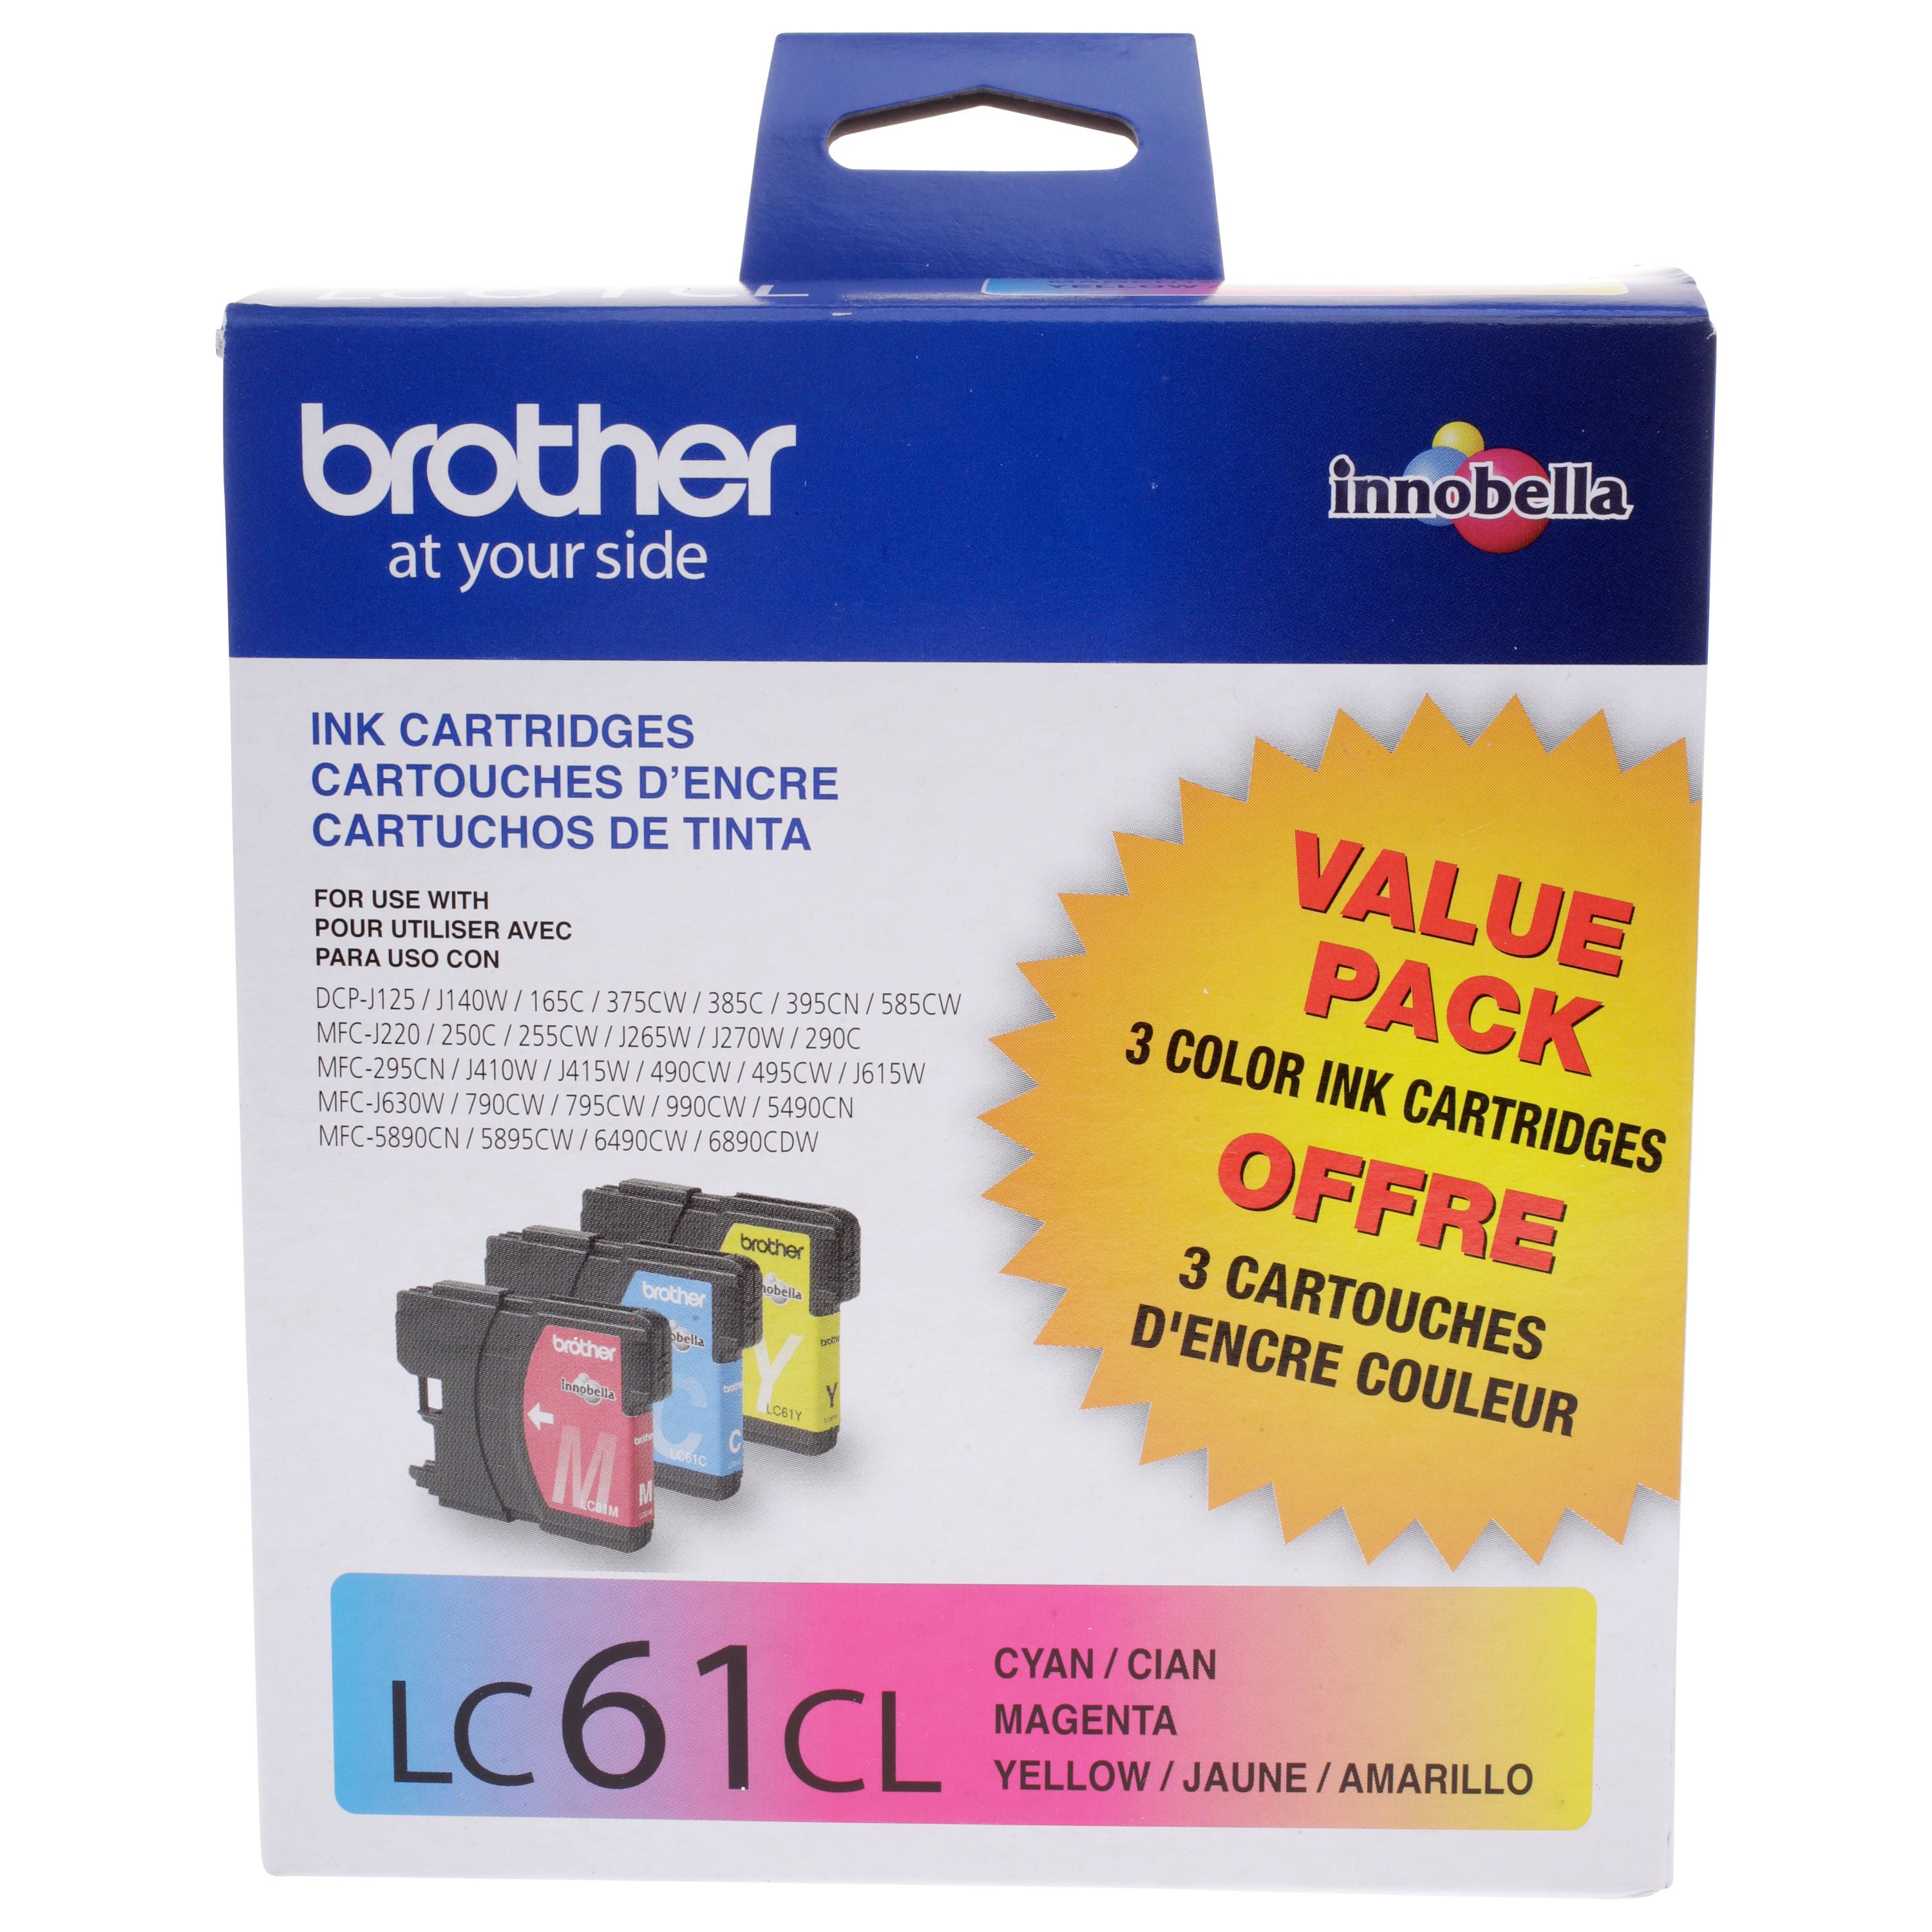 Brother Brand New Genuine Original OEM-LC61 4-Pack Set